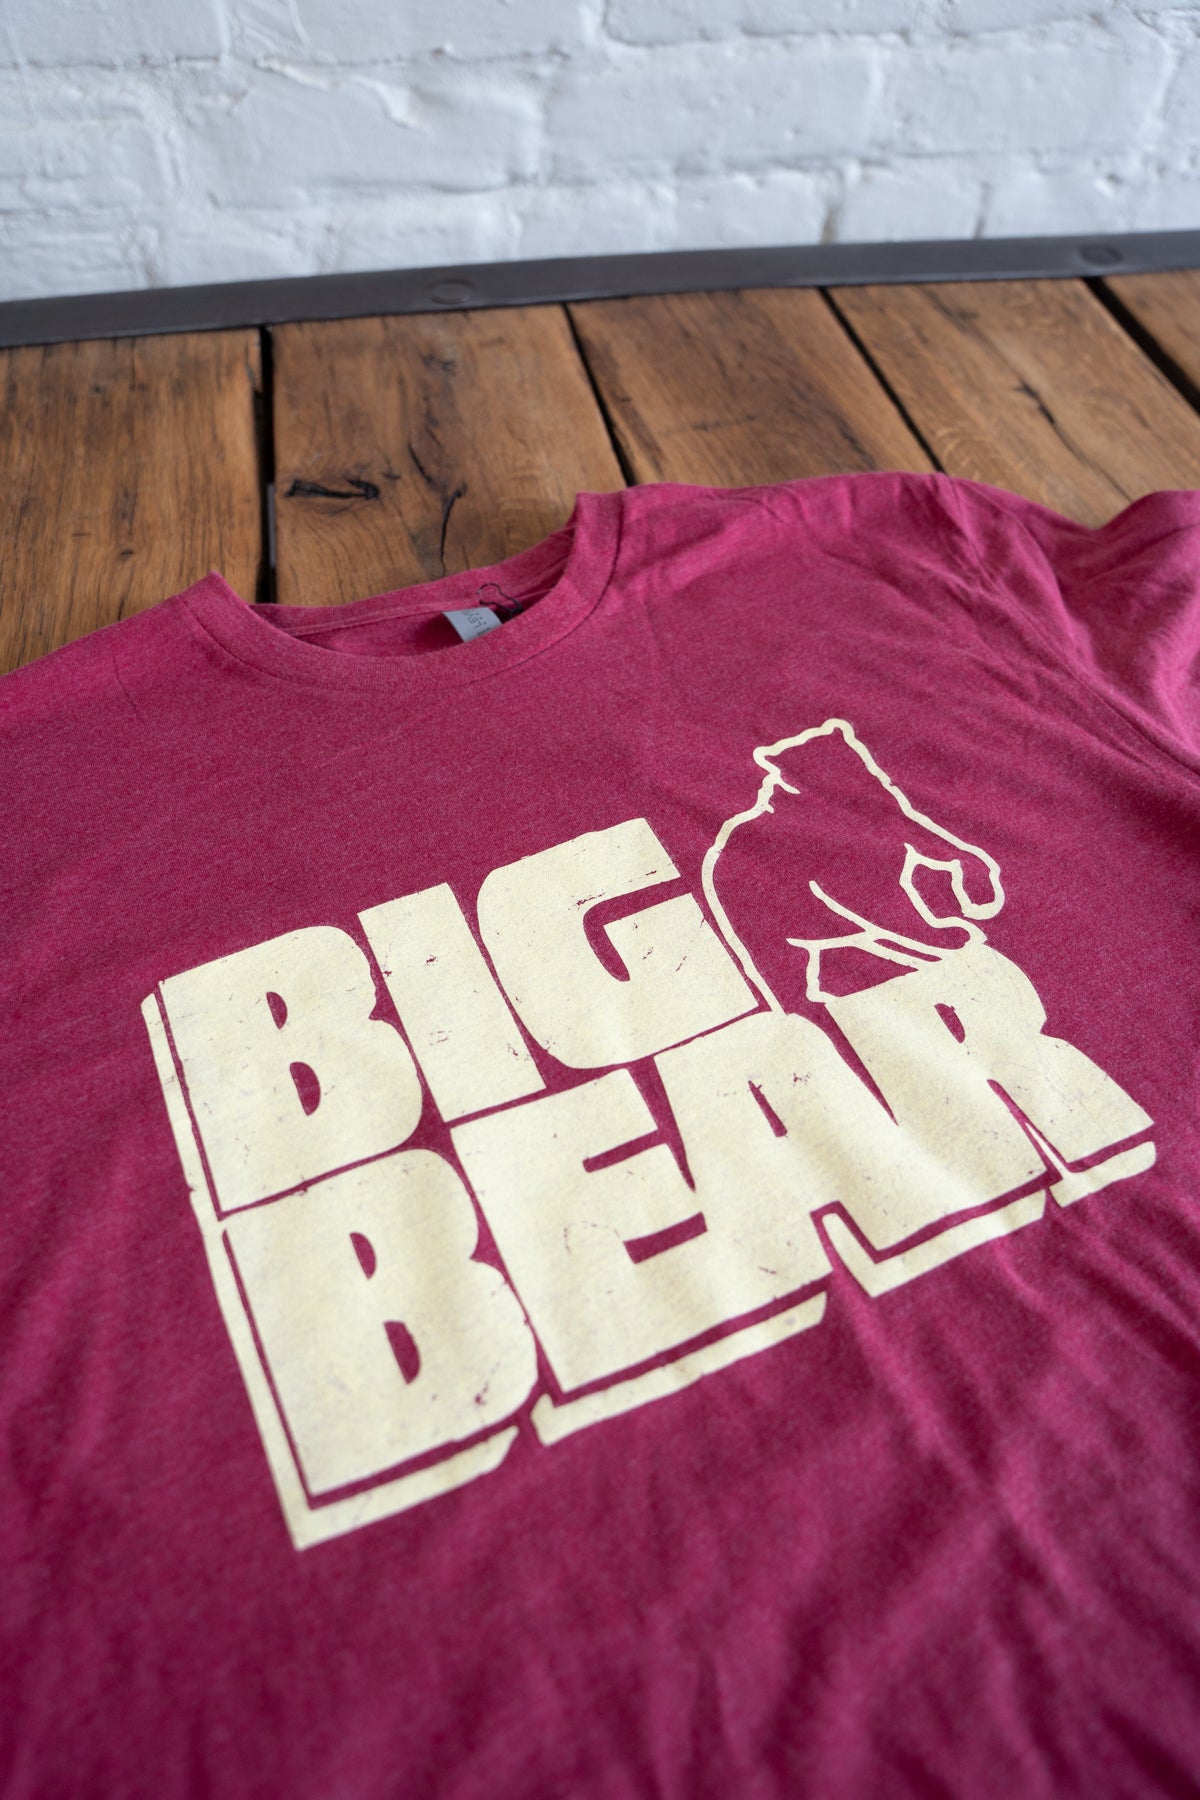 Big Bear T-Shirt